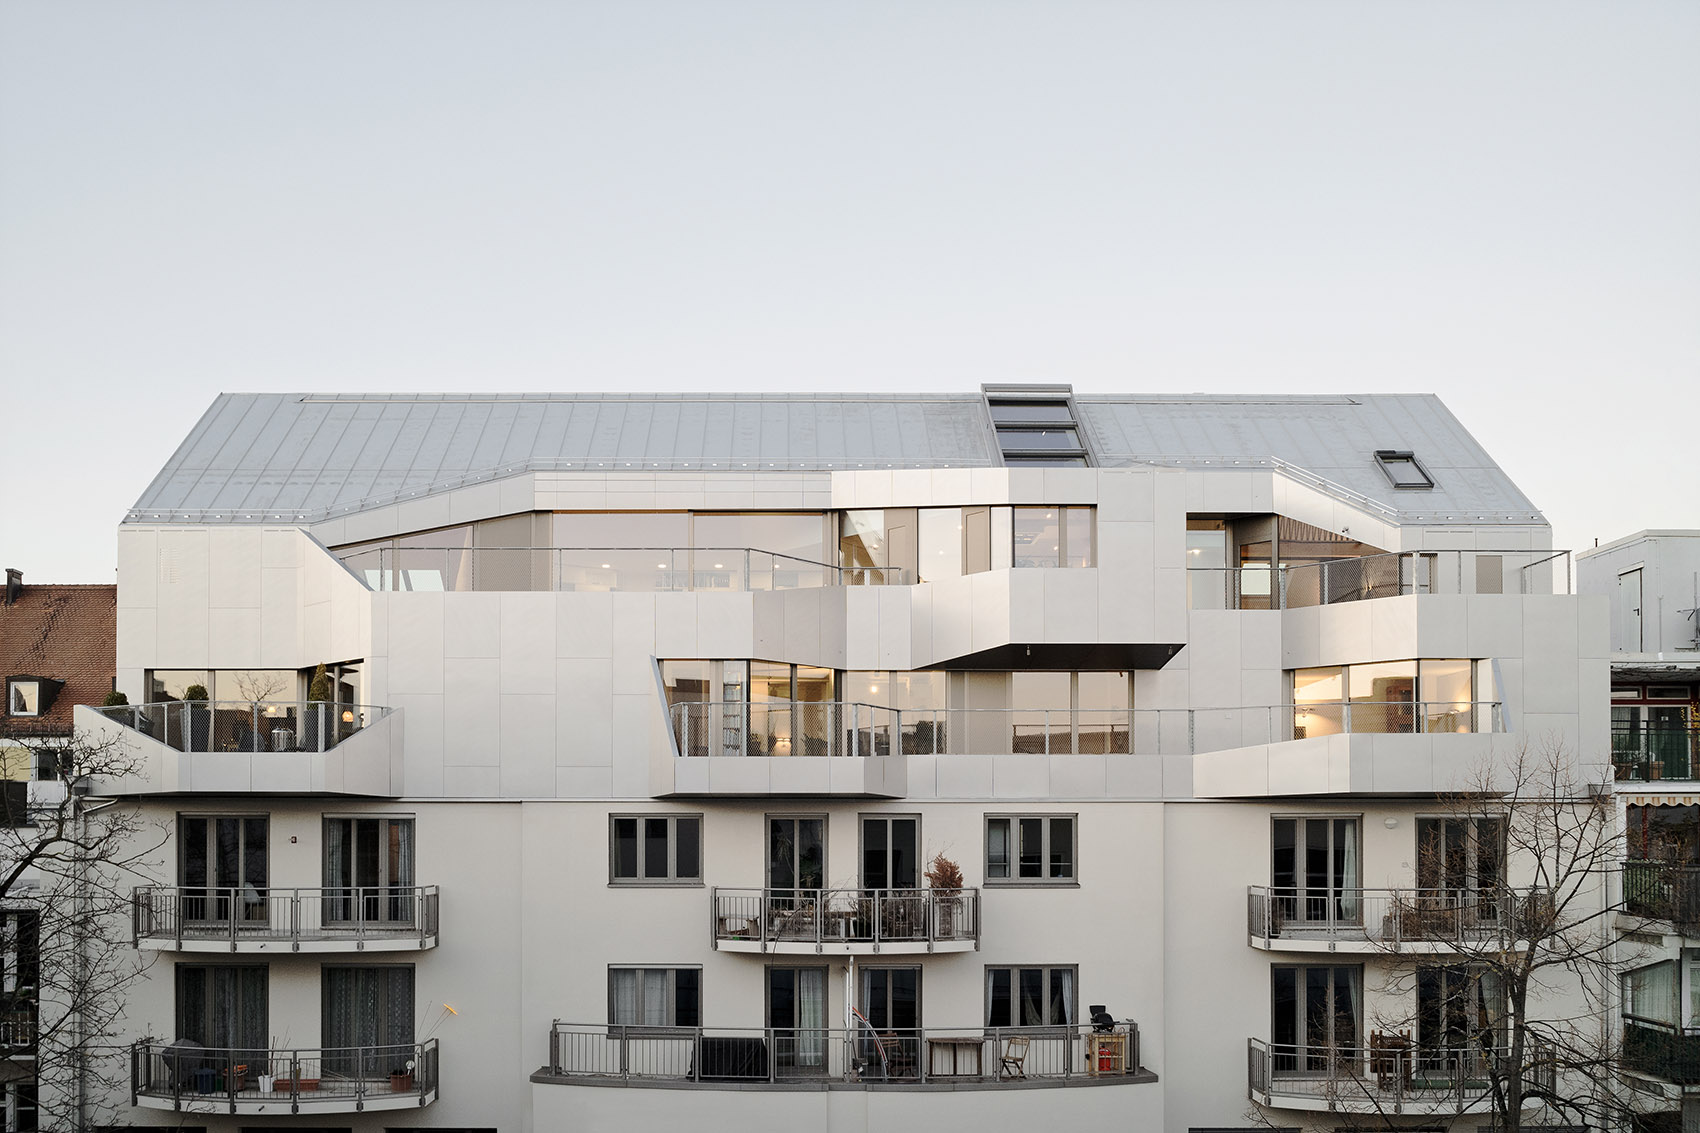 003-r11-roof-extension-maxvorstadt-by-pool-leber-architekten.jpg